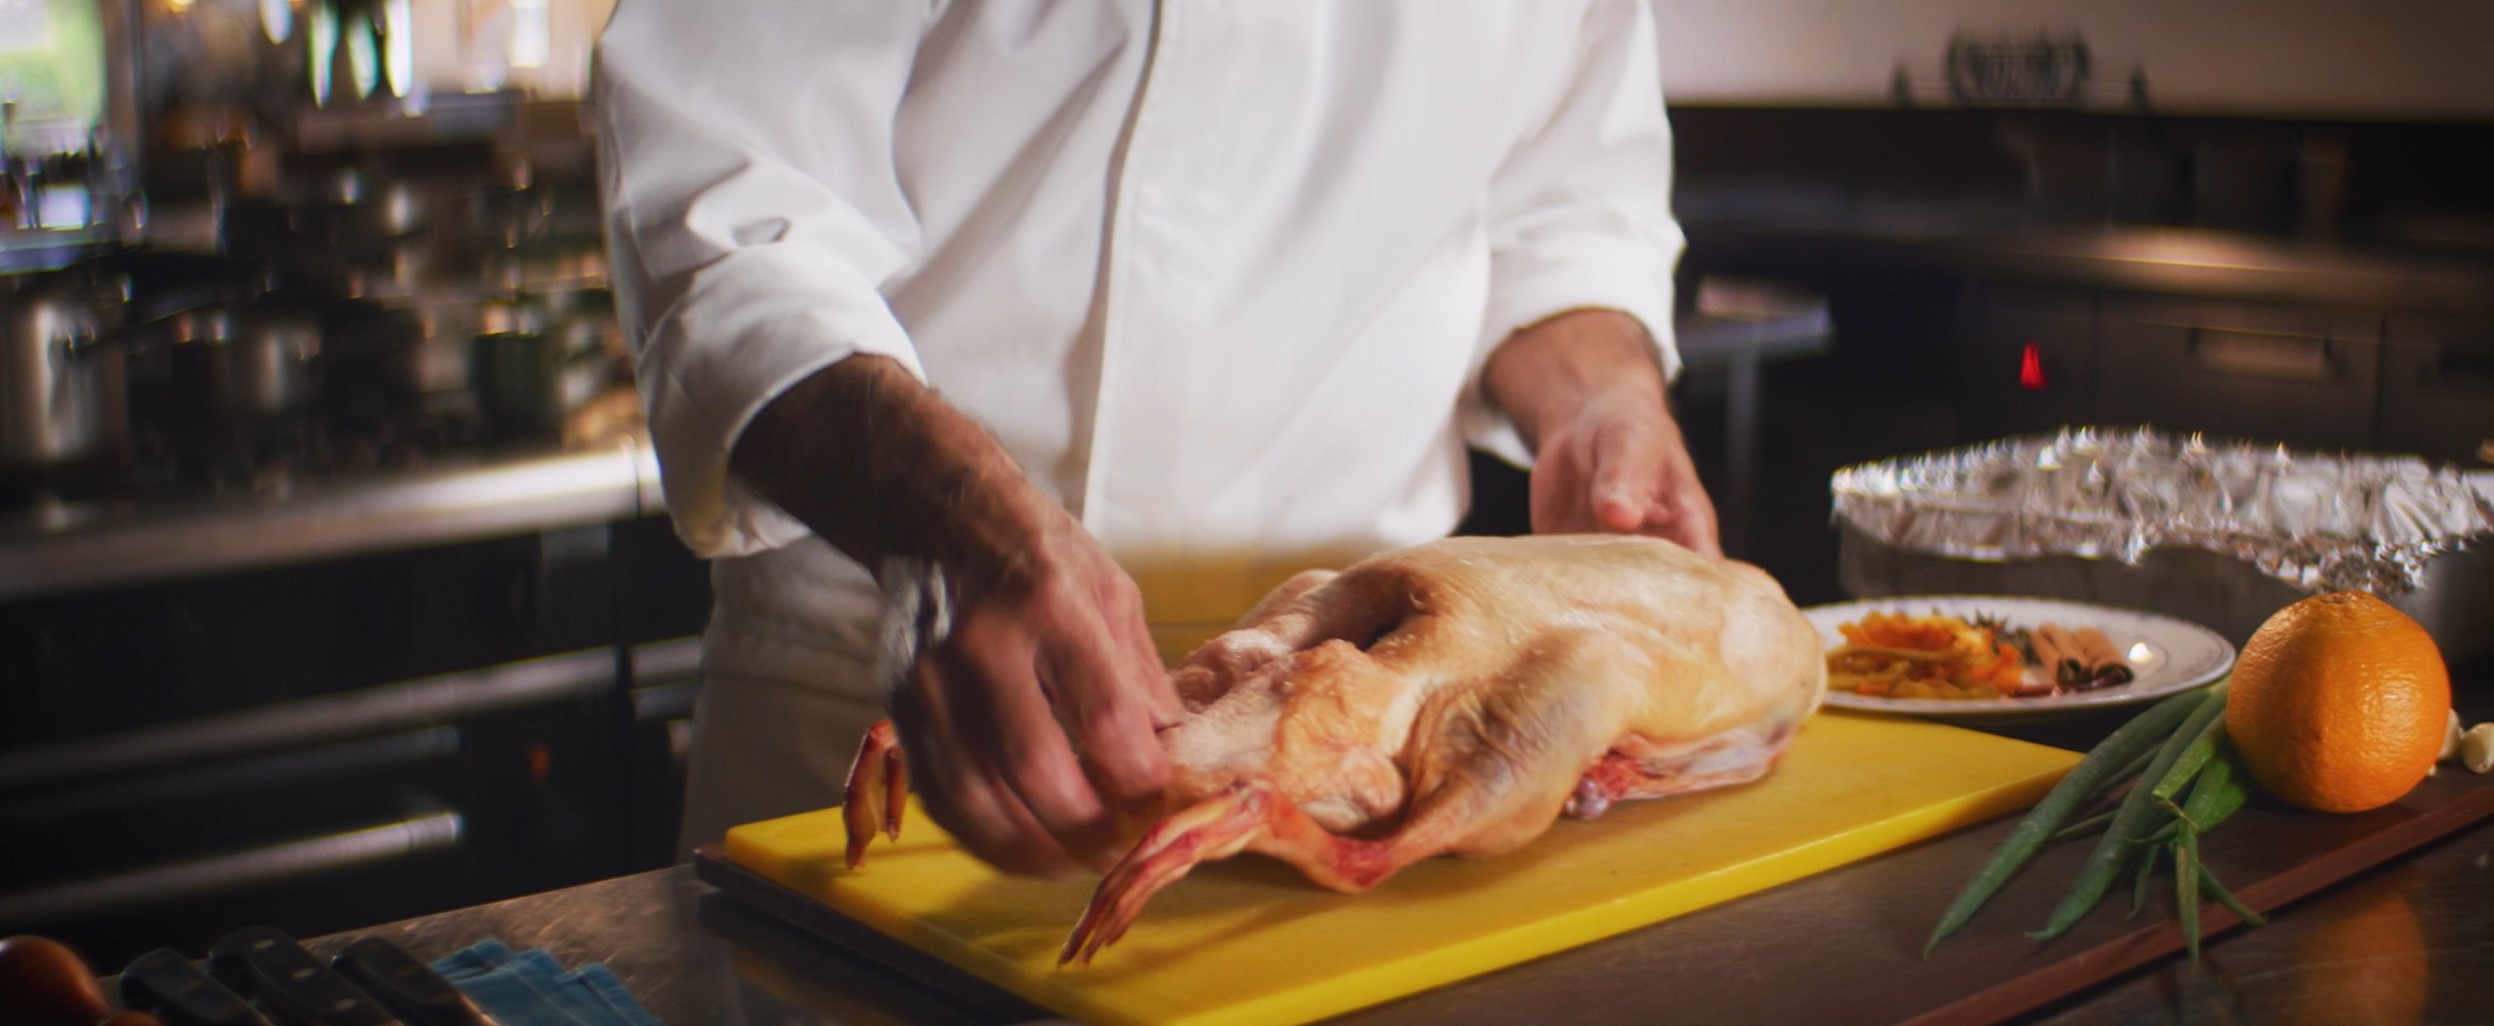 chef preparing roast duck